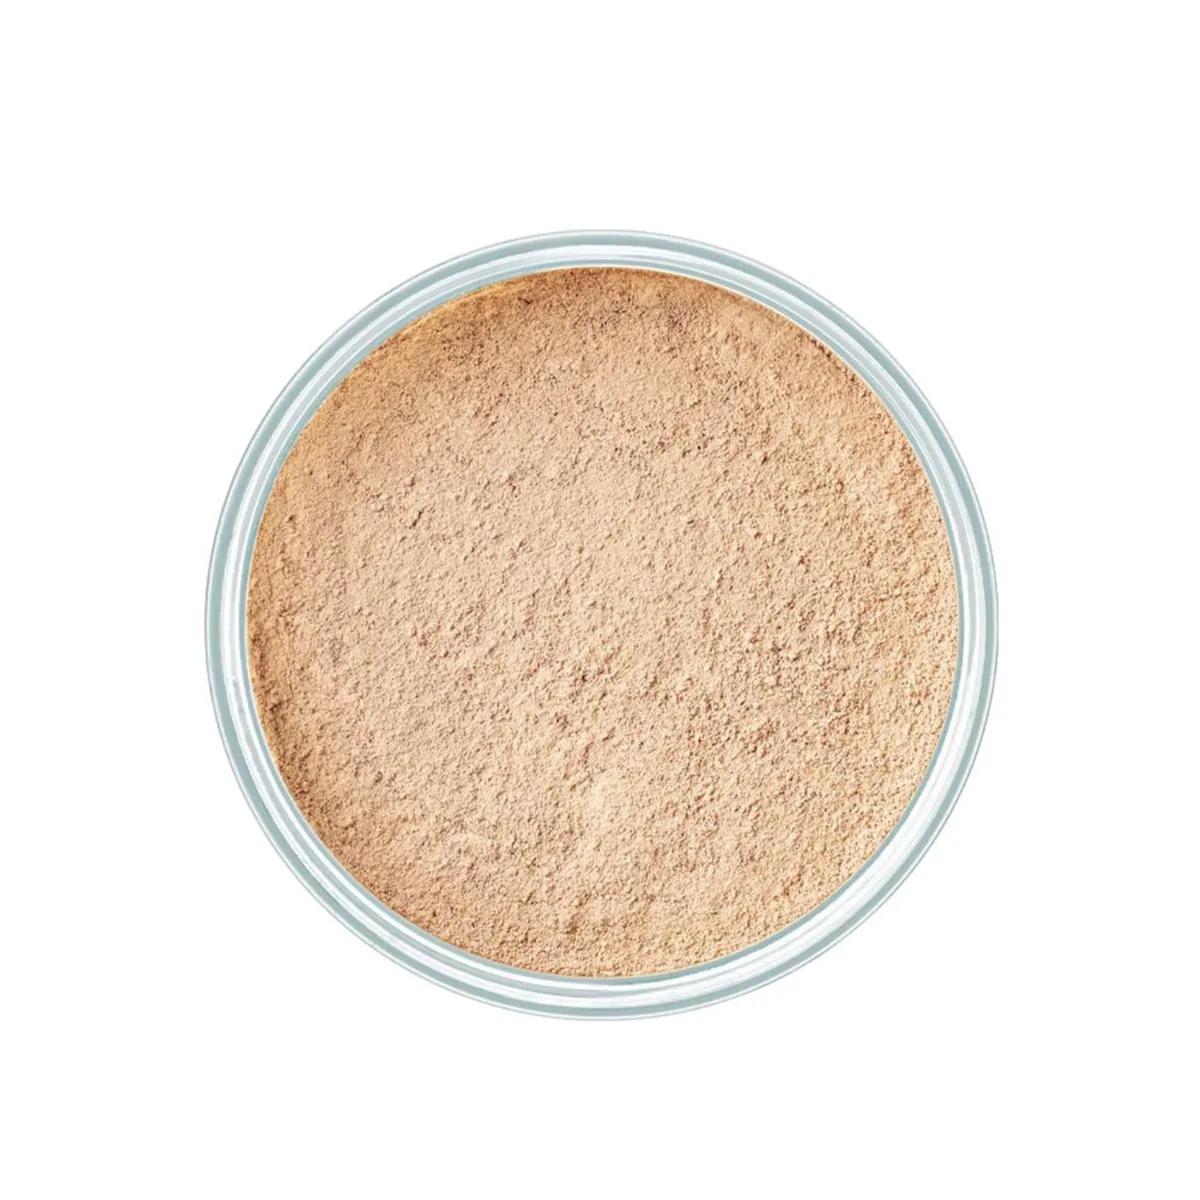 ARTDECO Mineral Powder Foundation sypki podkład mineralny, 04 – light beige, 15 g